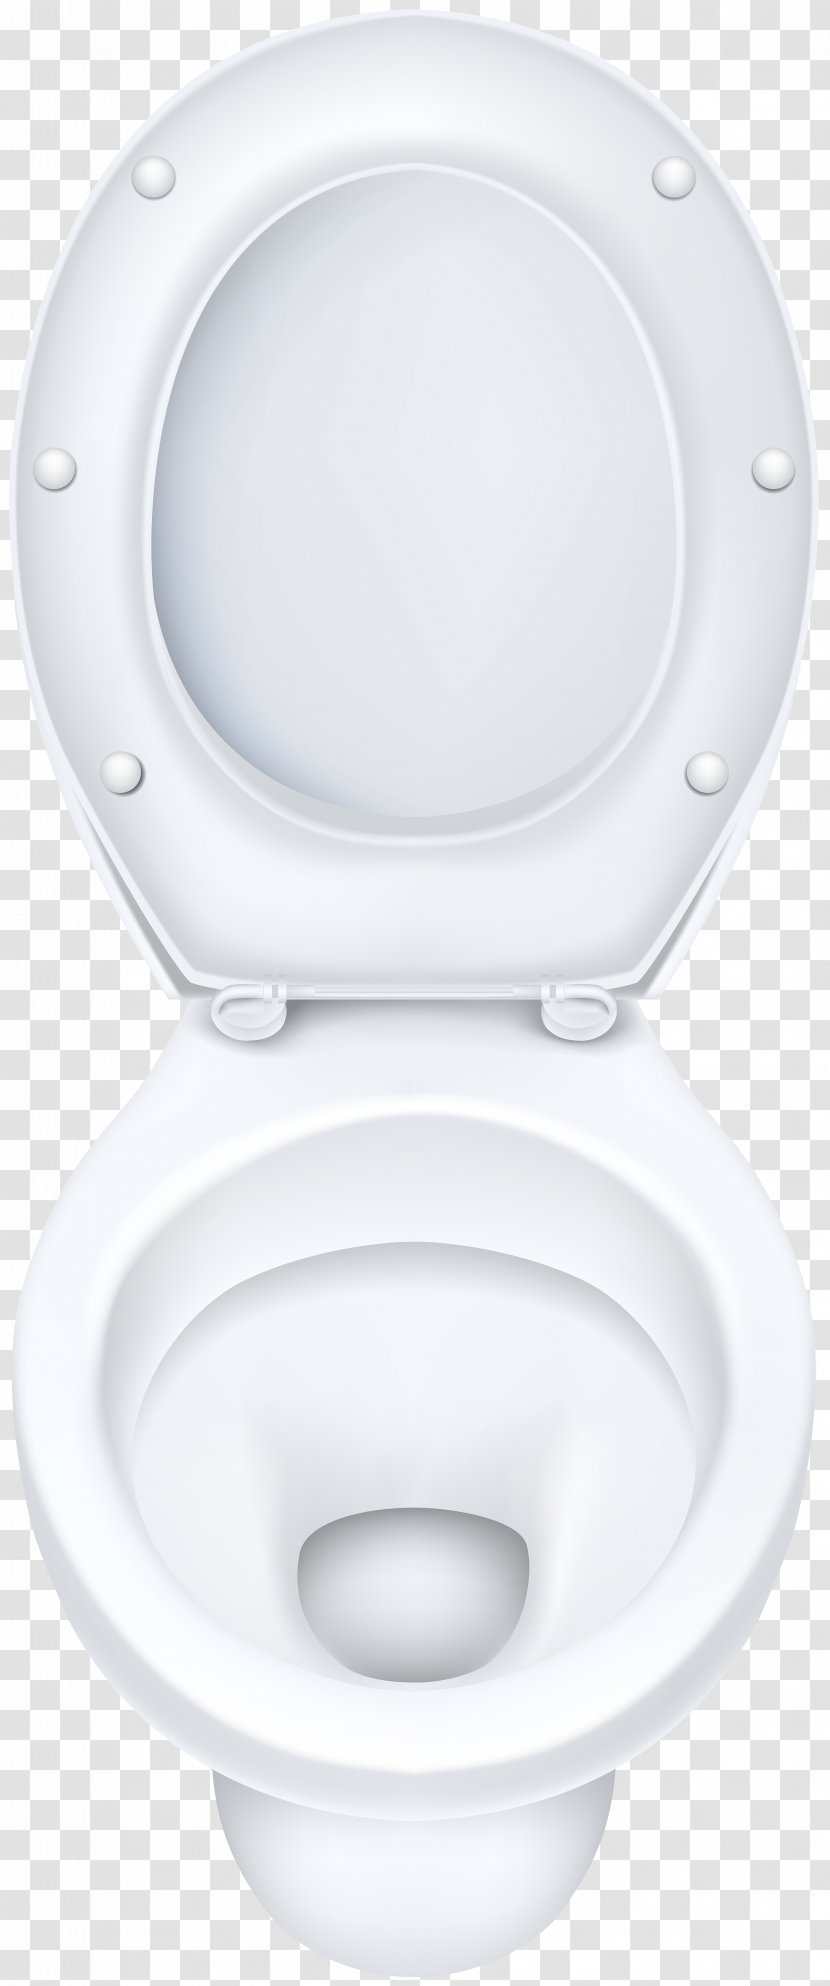 Toilet & Bidet Seats Tap Bathroom Sink - Seat Transparent PNG